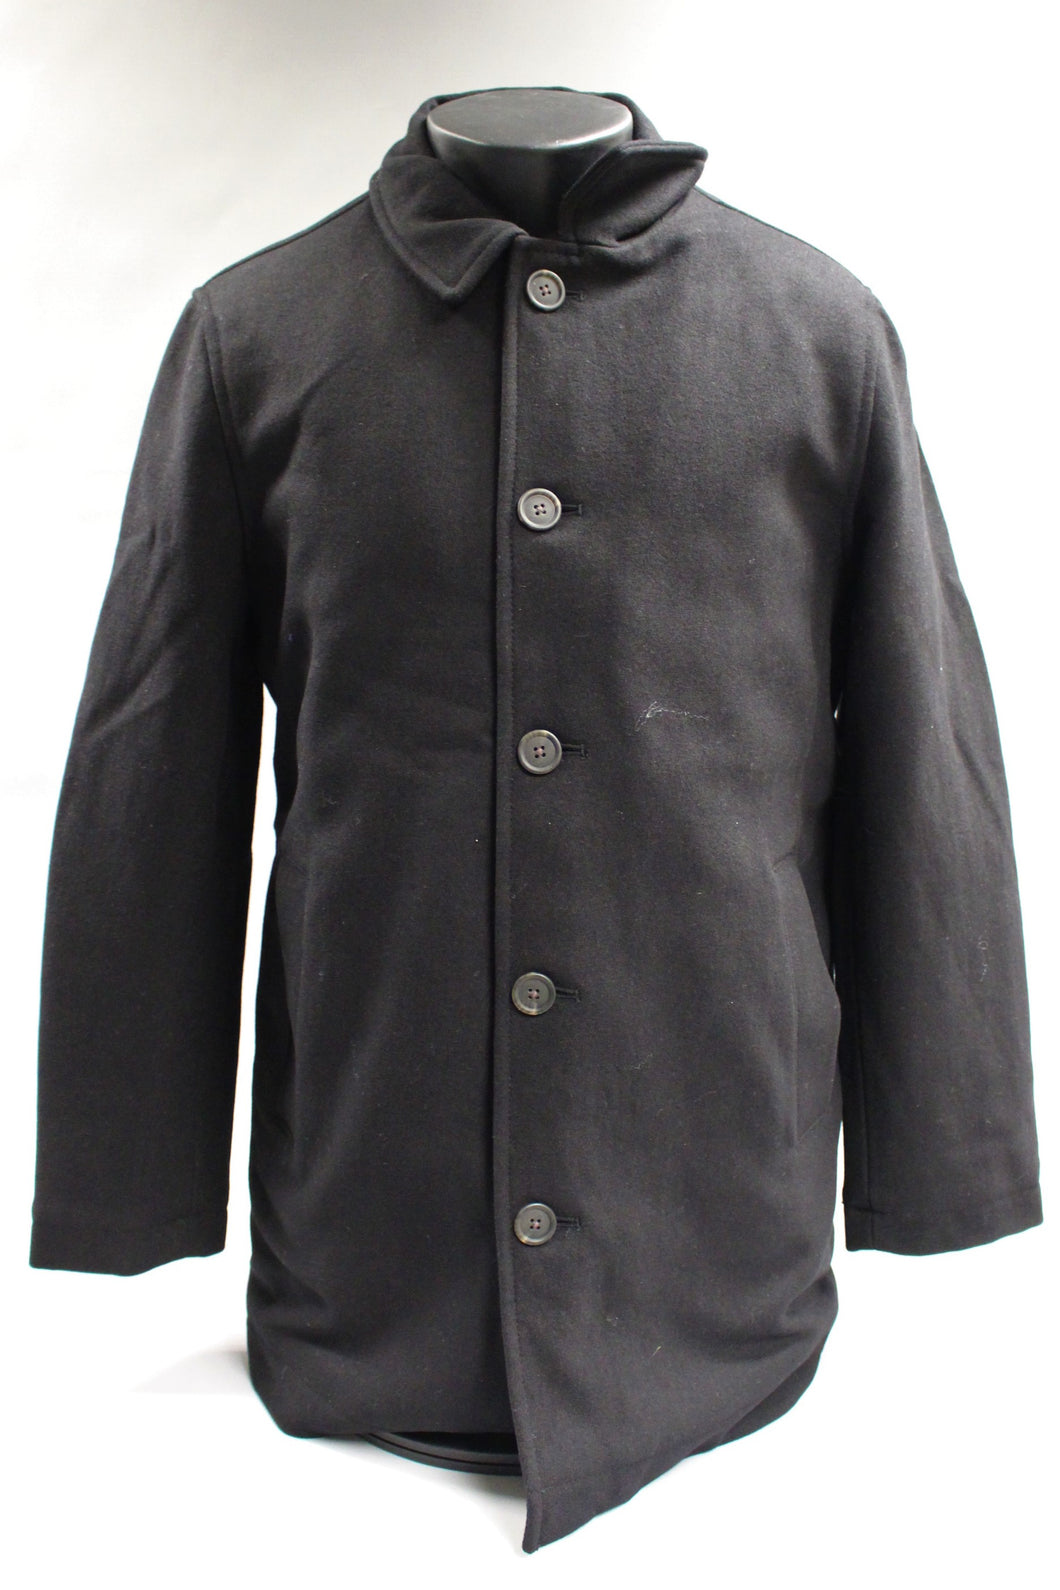 Amazon Essentials Men's Wool Blend Heavyweight Car Coat, Black, Medium, New